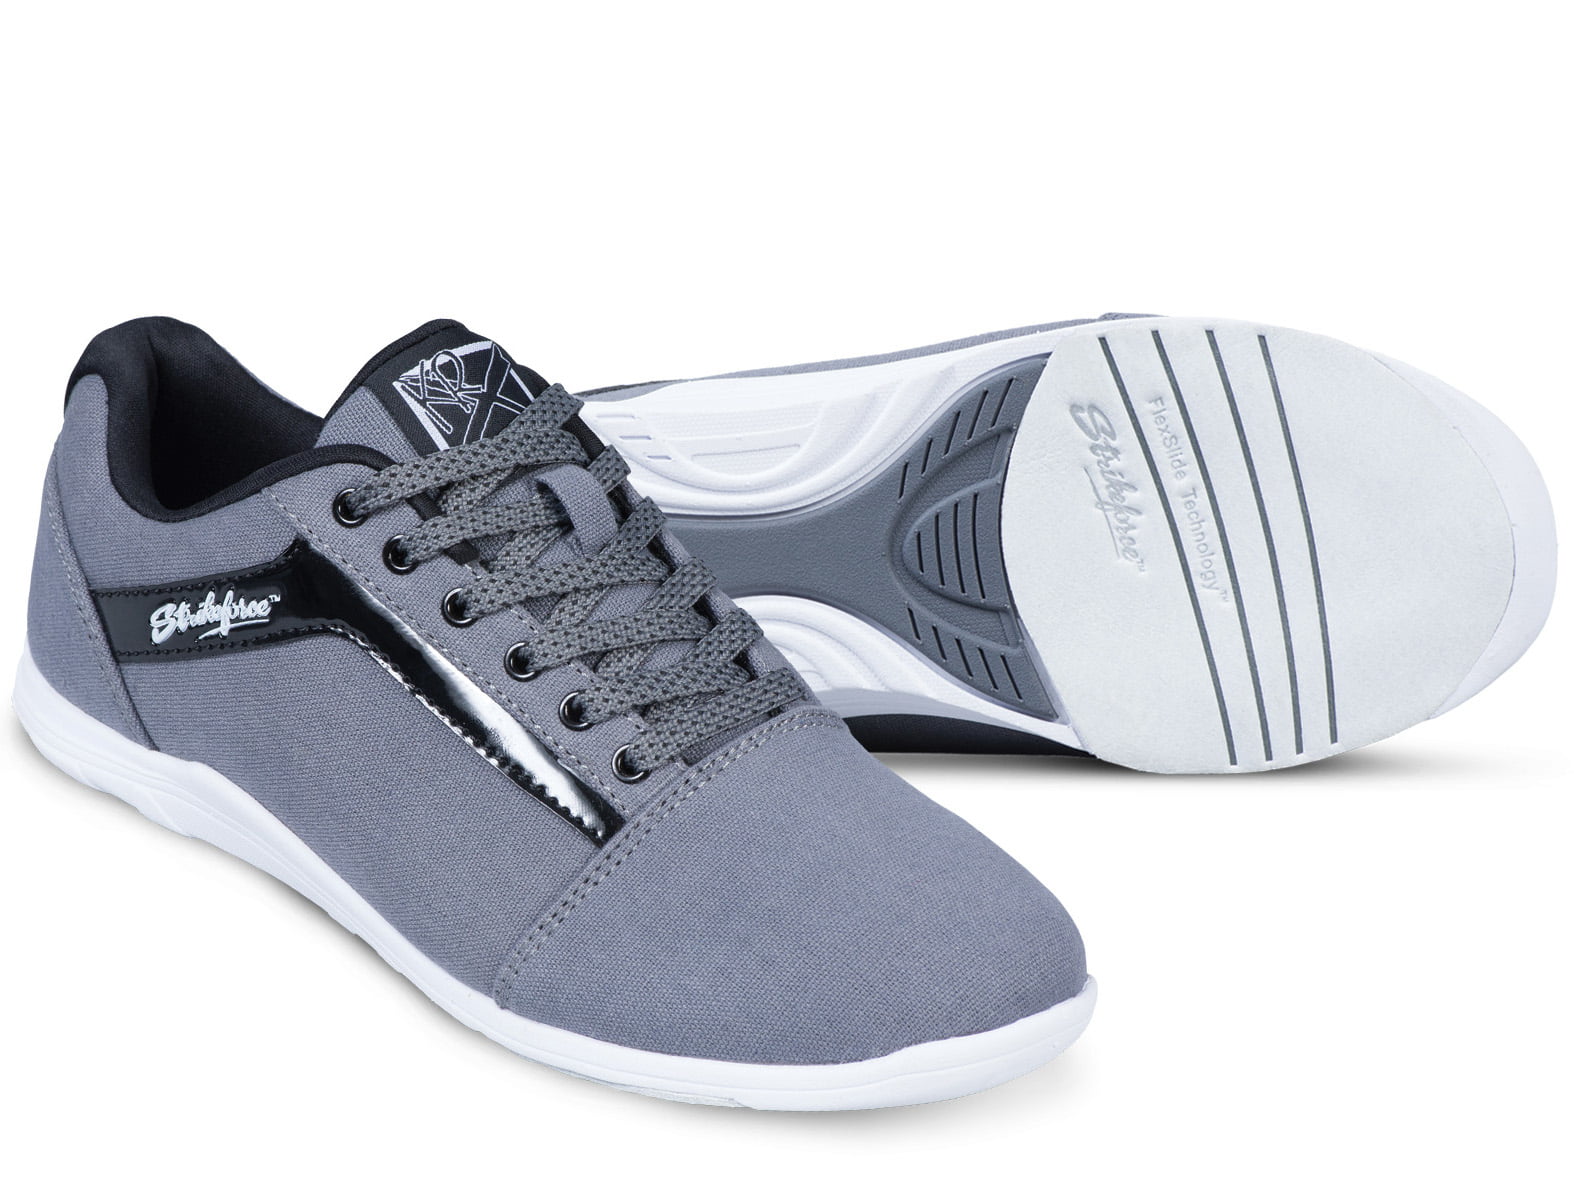 Dek Unisex Adults Jack Lace up Trainer-Style Bowling Shoes 6 UK Grey 